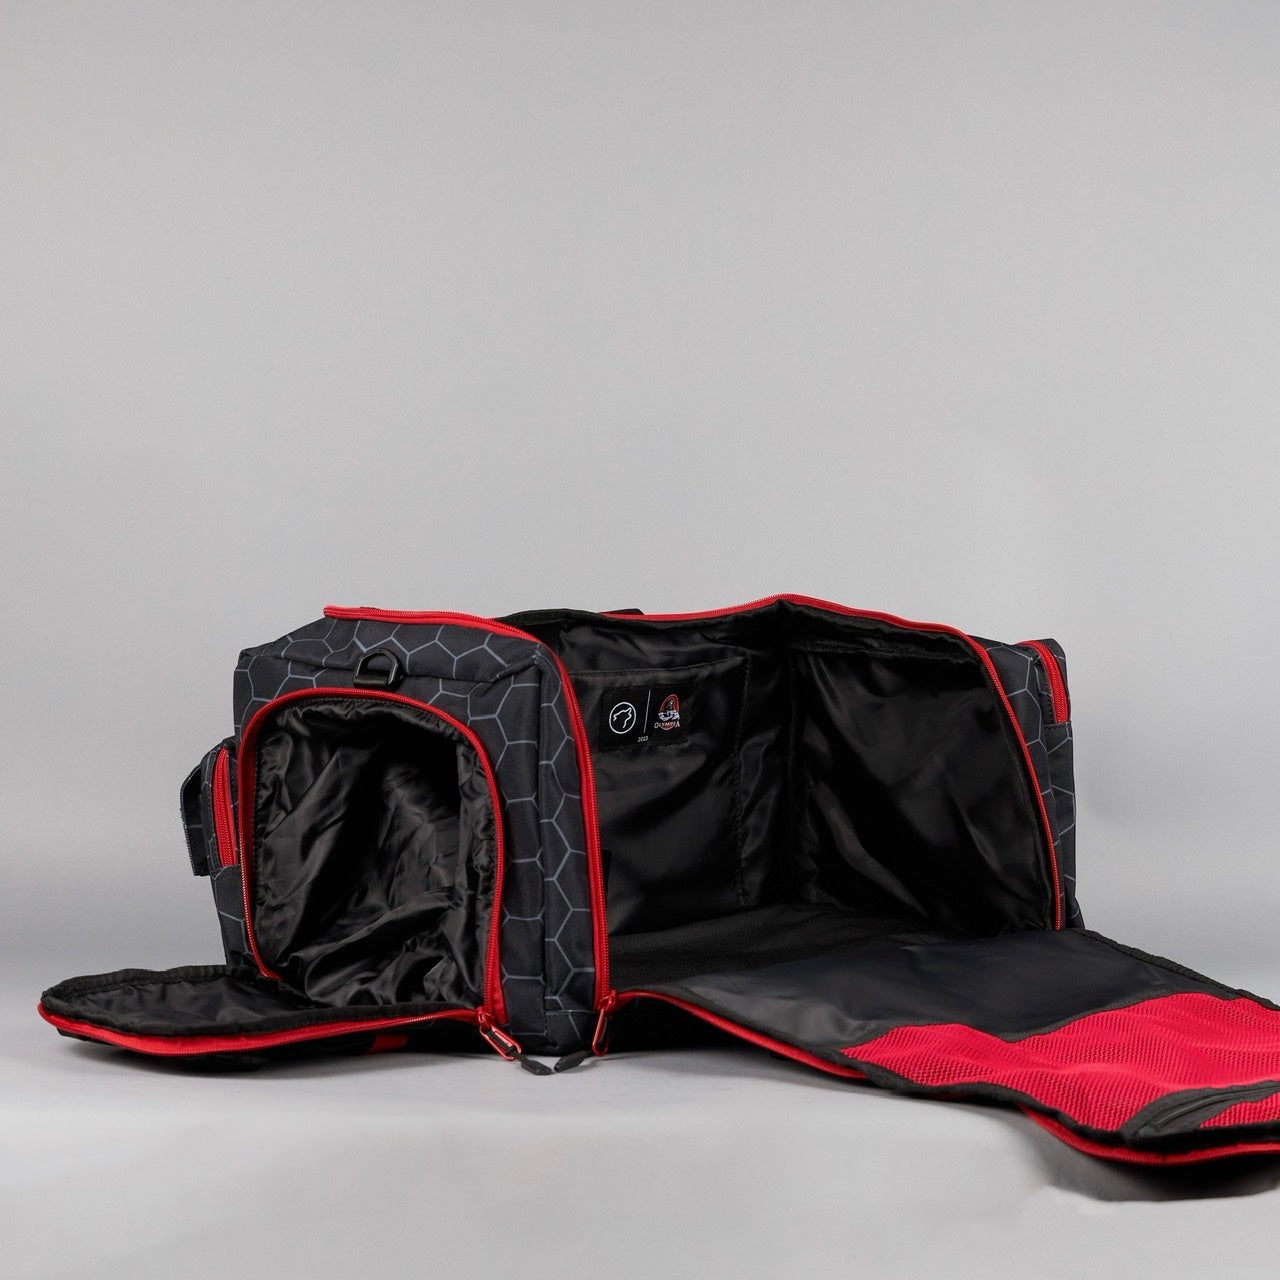 40L 2023 IFBB Olympia Duffle Bag